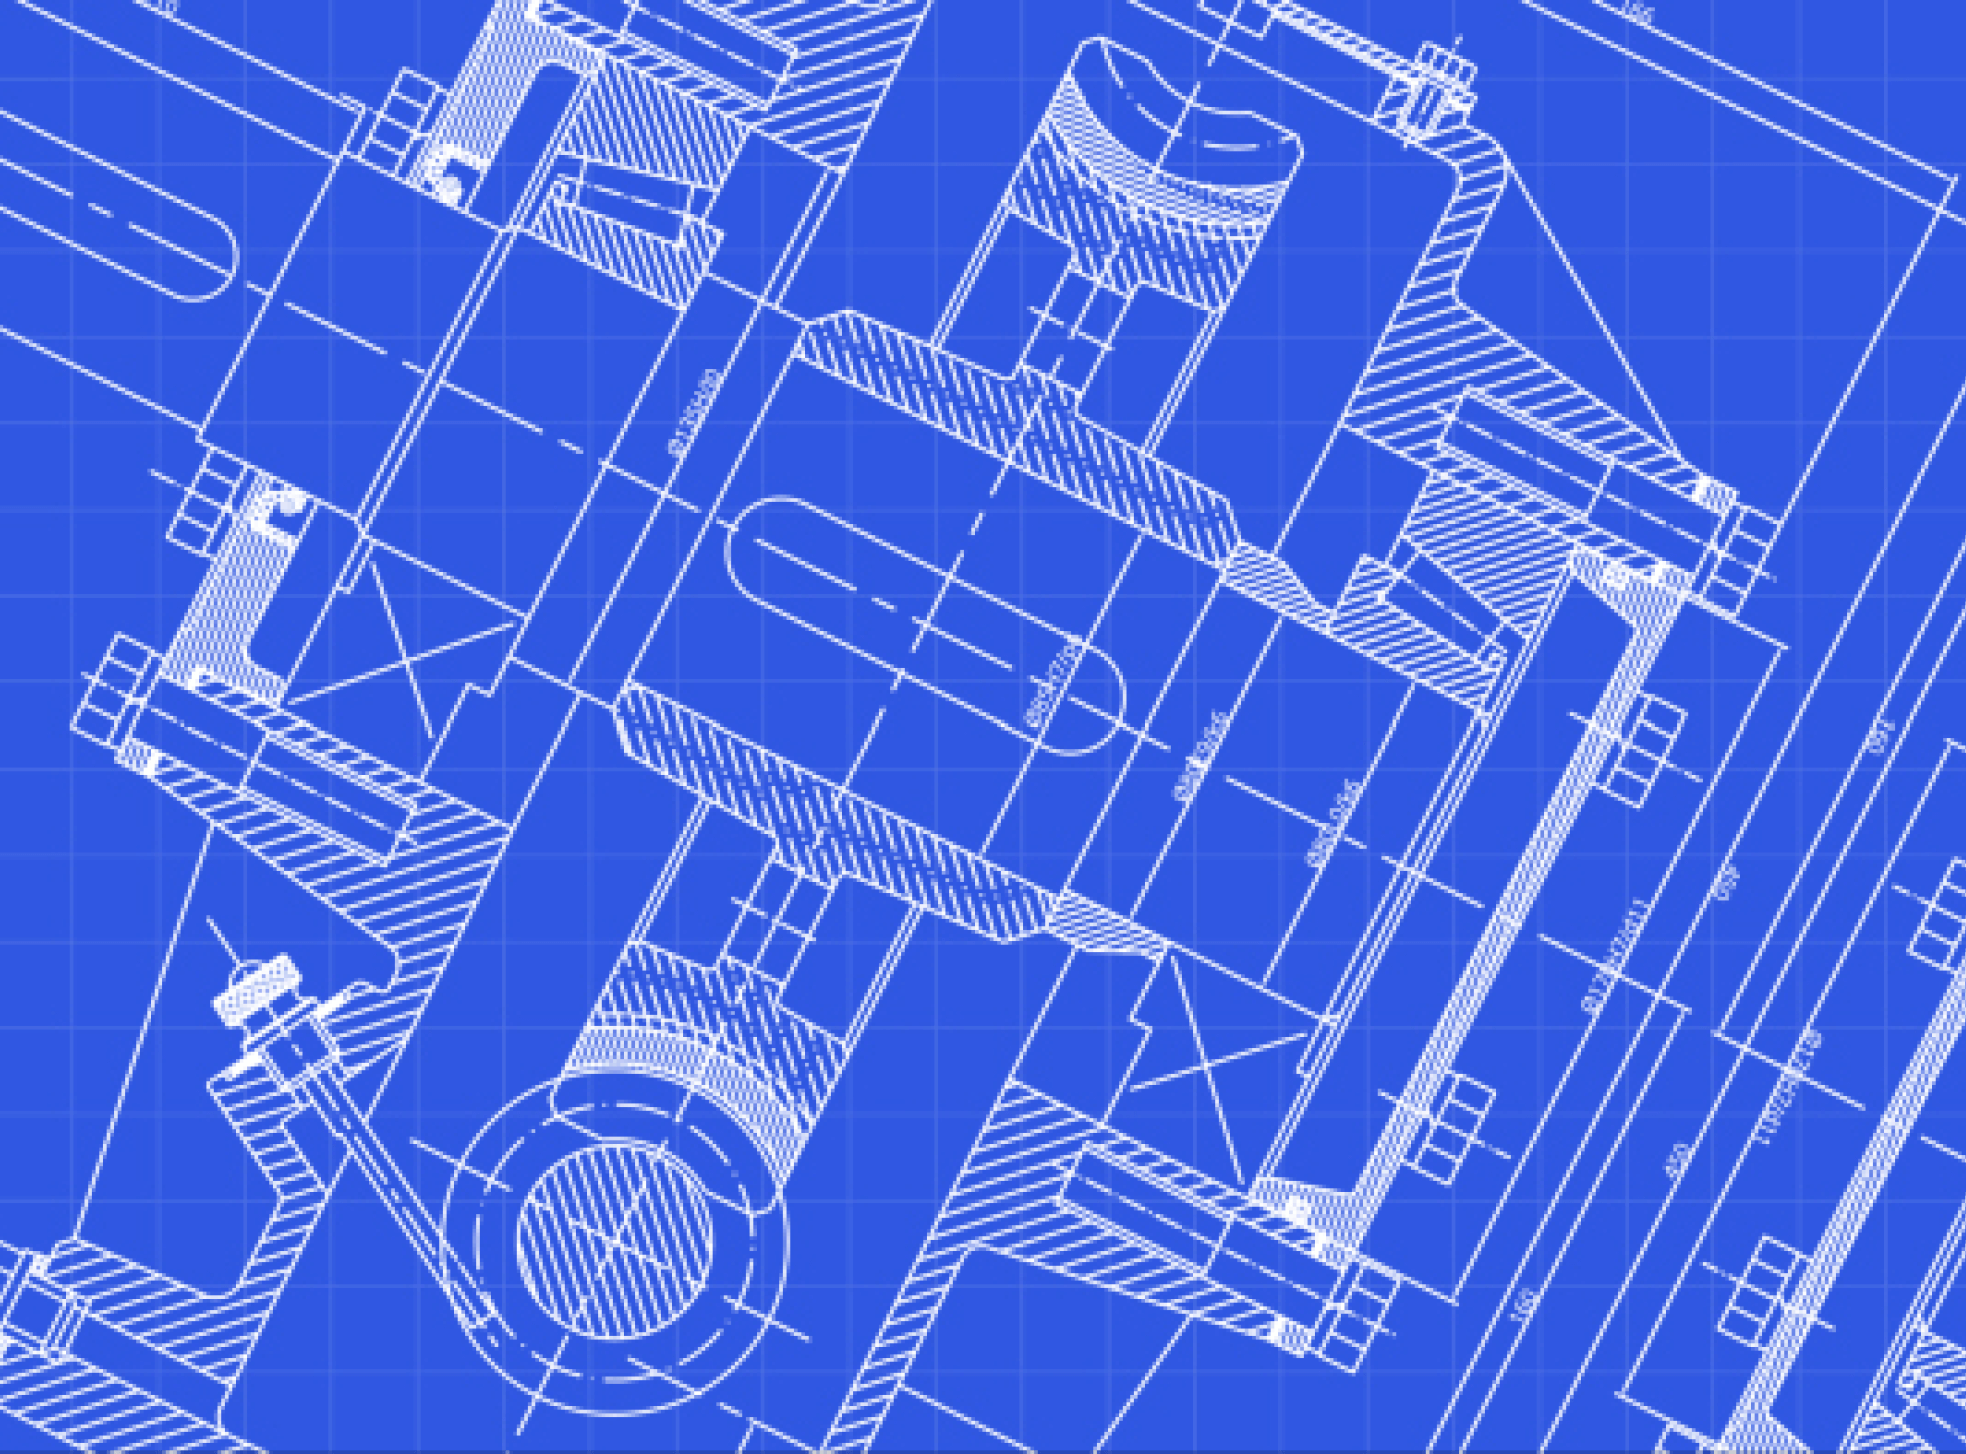 Stylized architectural blueprint